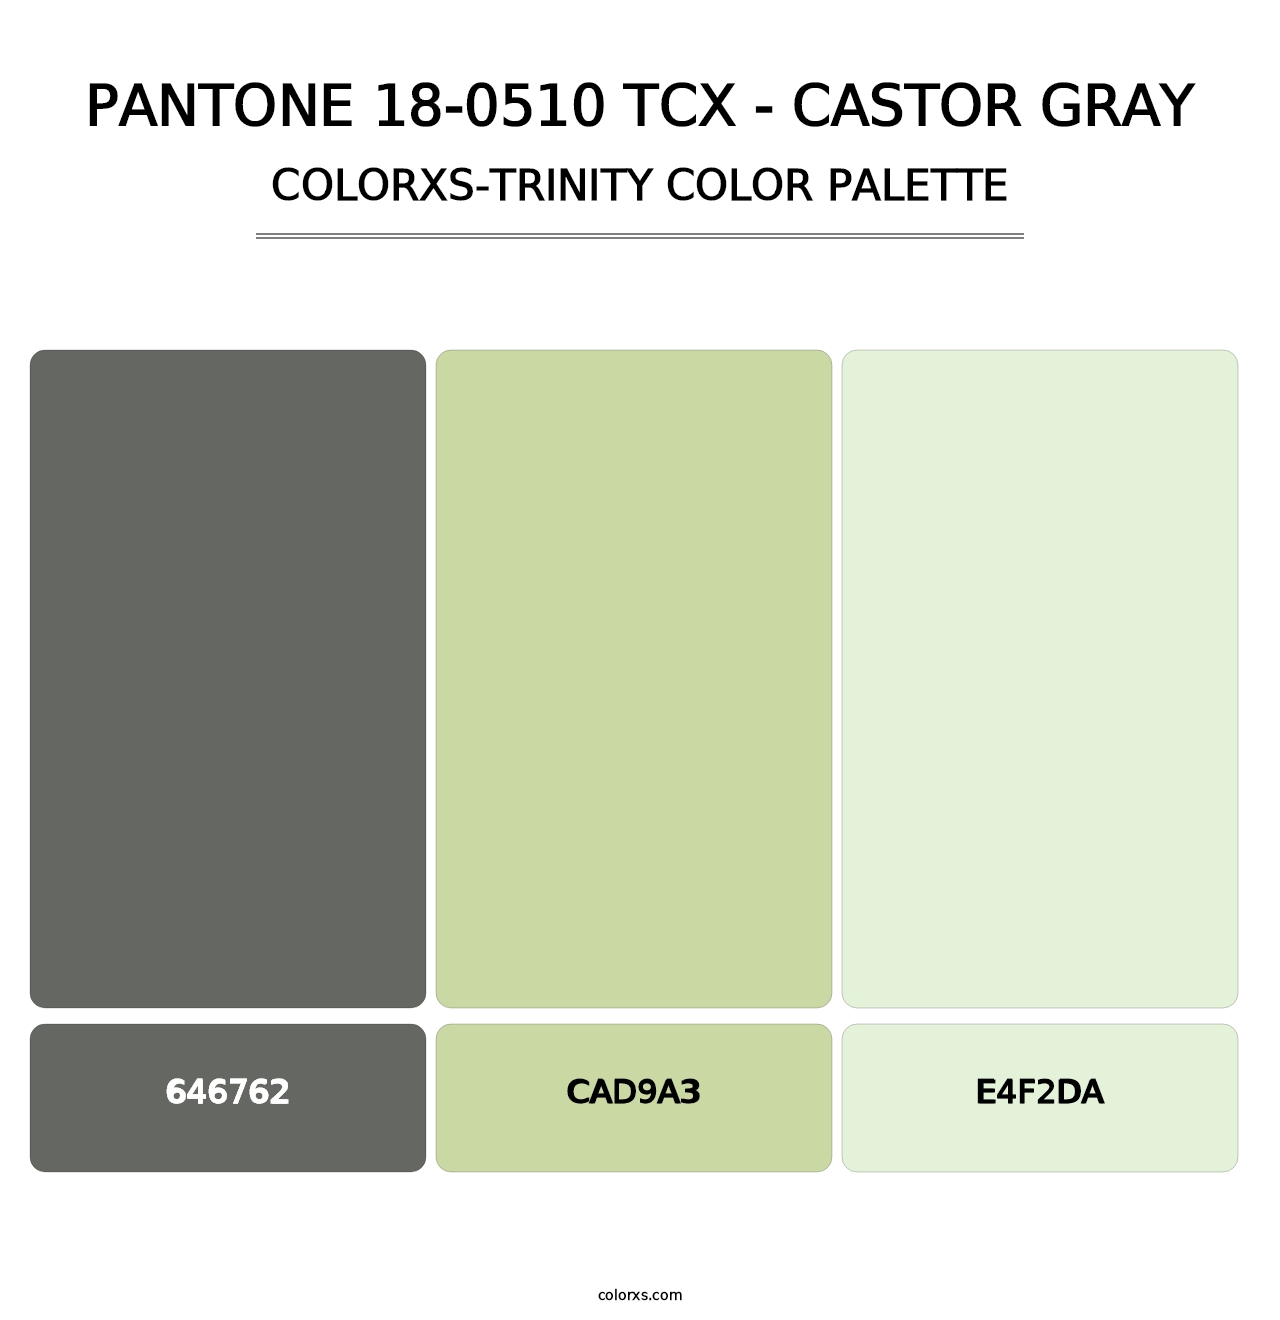 PANTONE 18-0510 TCX - Castor Gray - Colorxs Trinity Palette